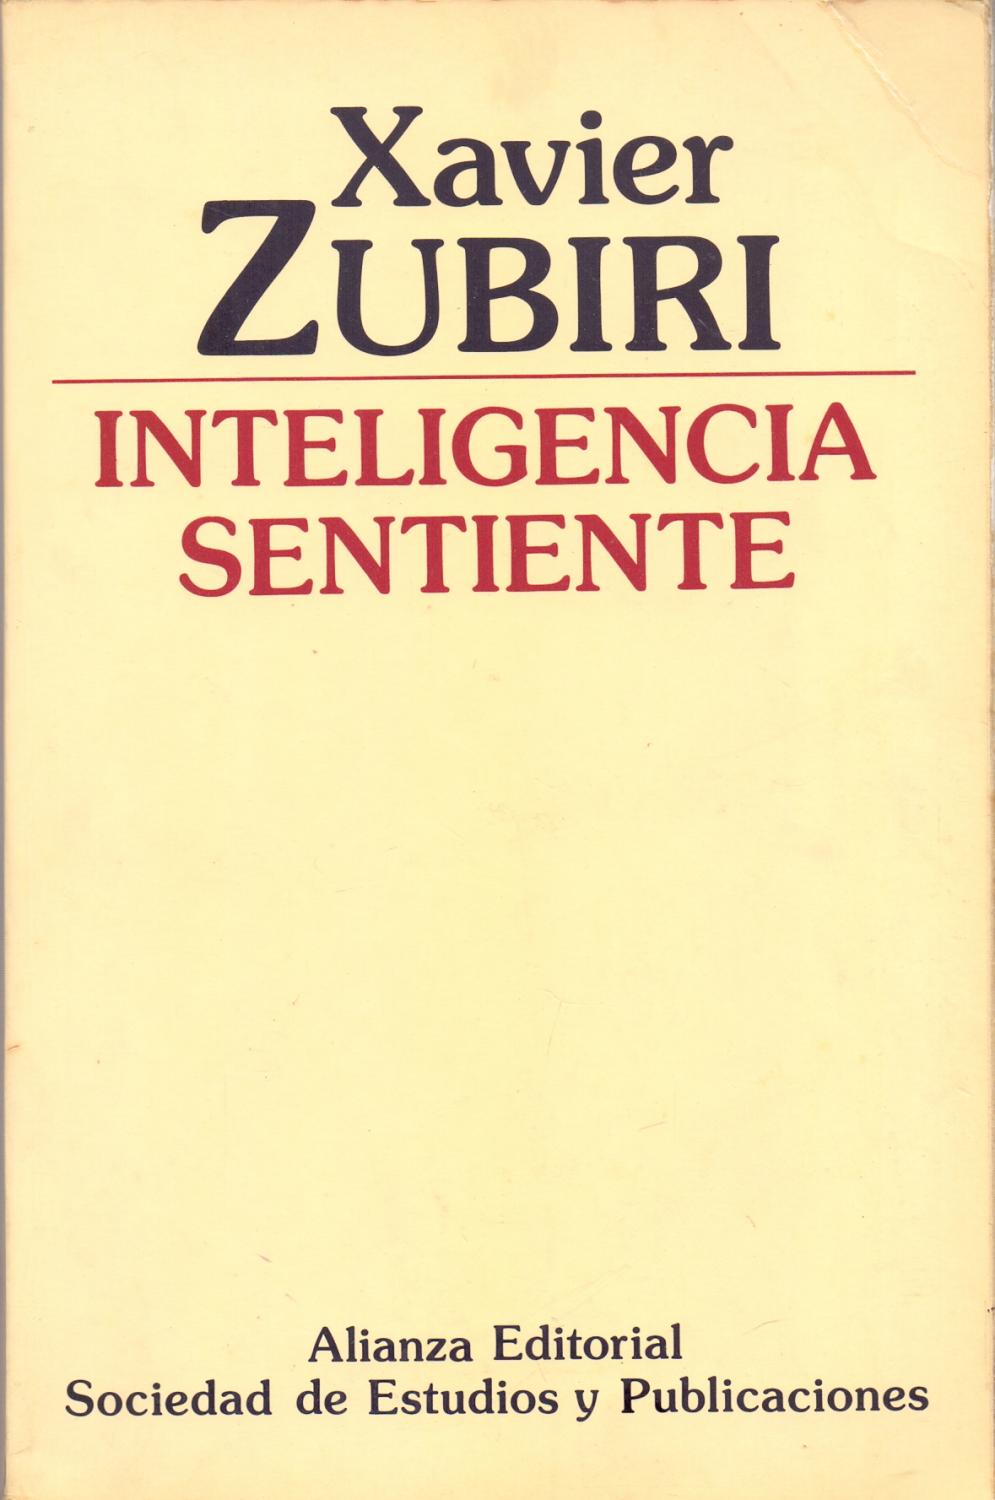 Xavier Zubiri: Inteligencia sentiente (Spanish language, 2004, Tecnos)